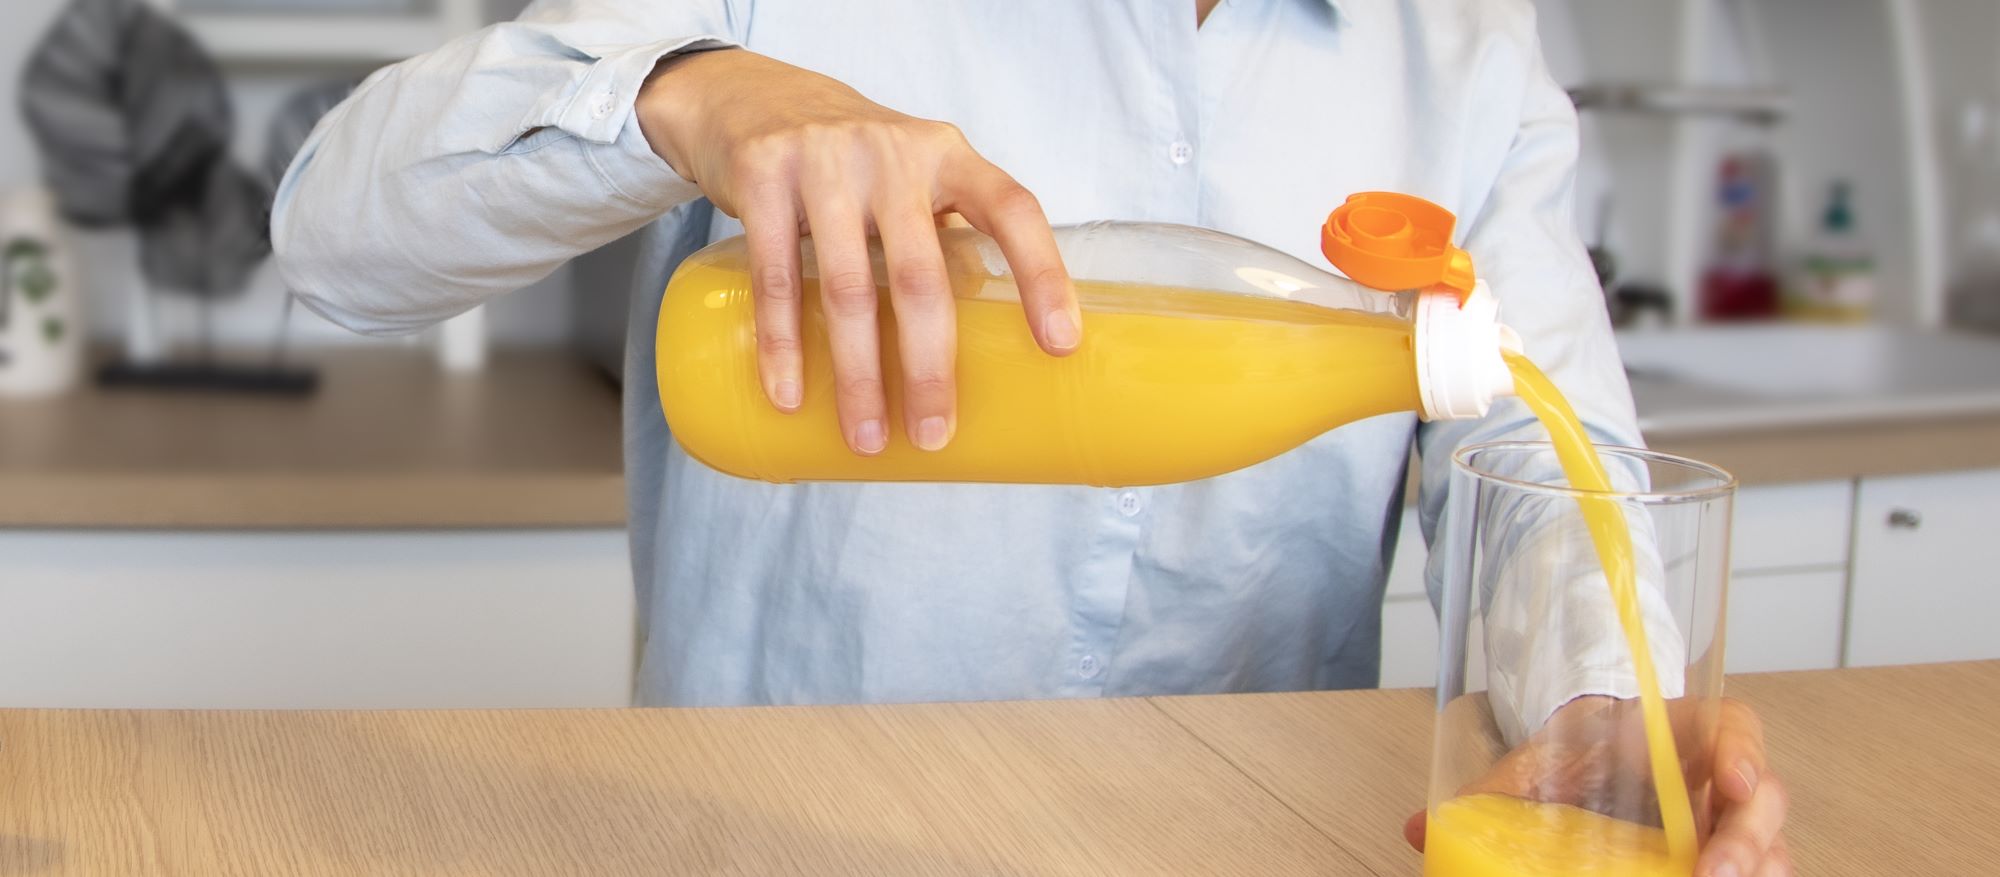 Pouring orange juice into glass using Kiso closure